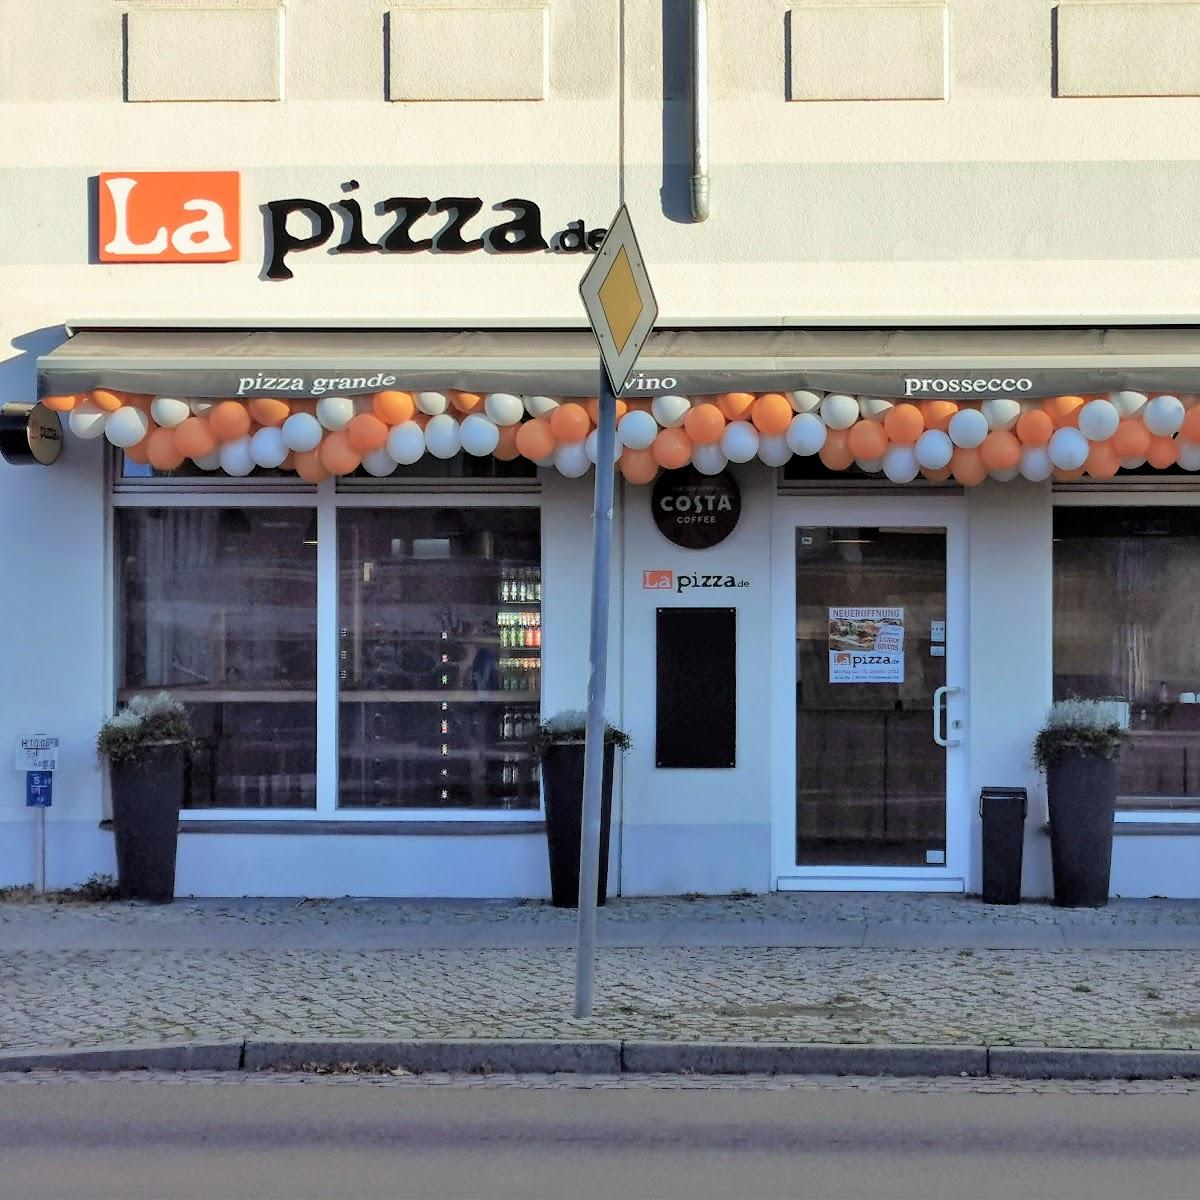 Restaurant "La pizza.de" in Strausberg